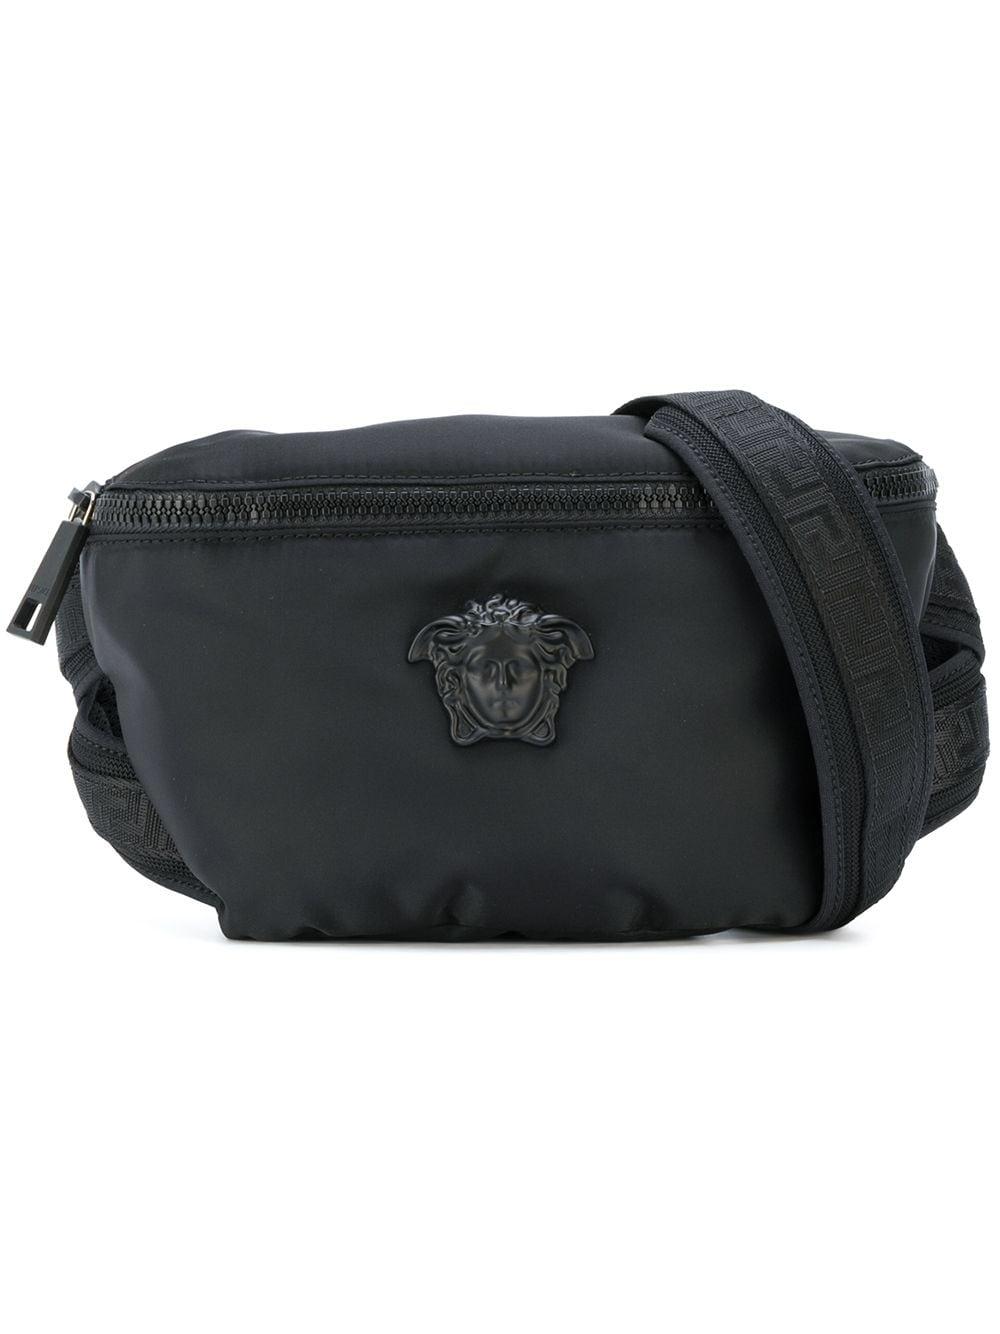 Versace Medusa Palazzo Belt Bag in Black for Men | Lyst